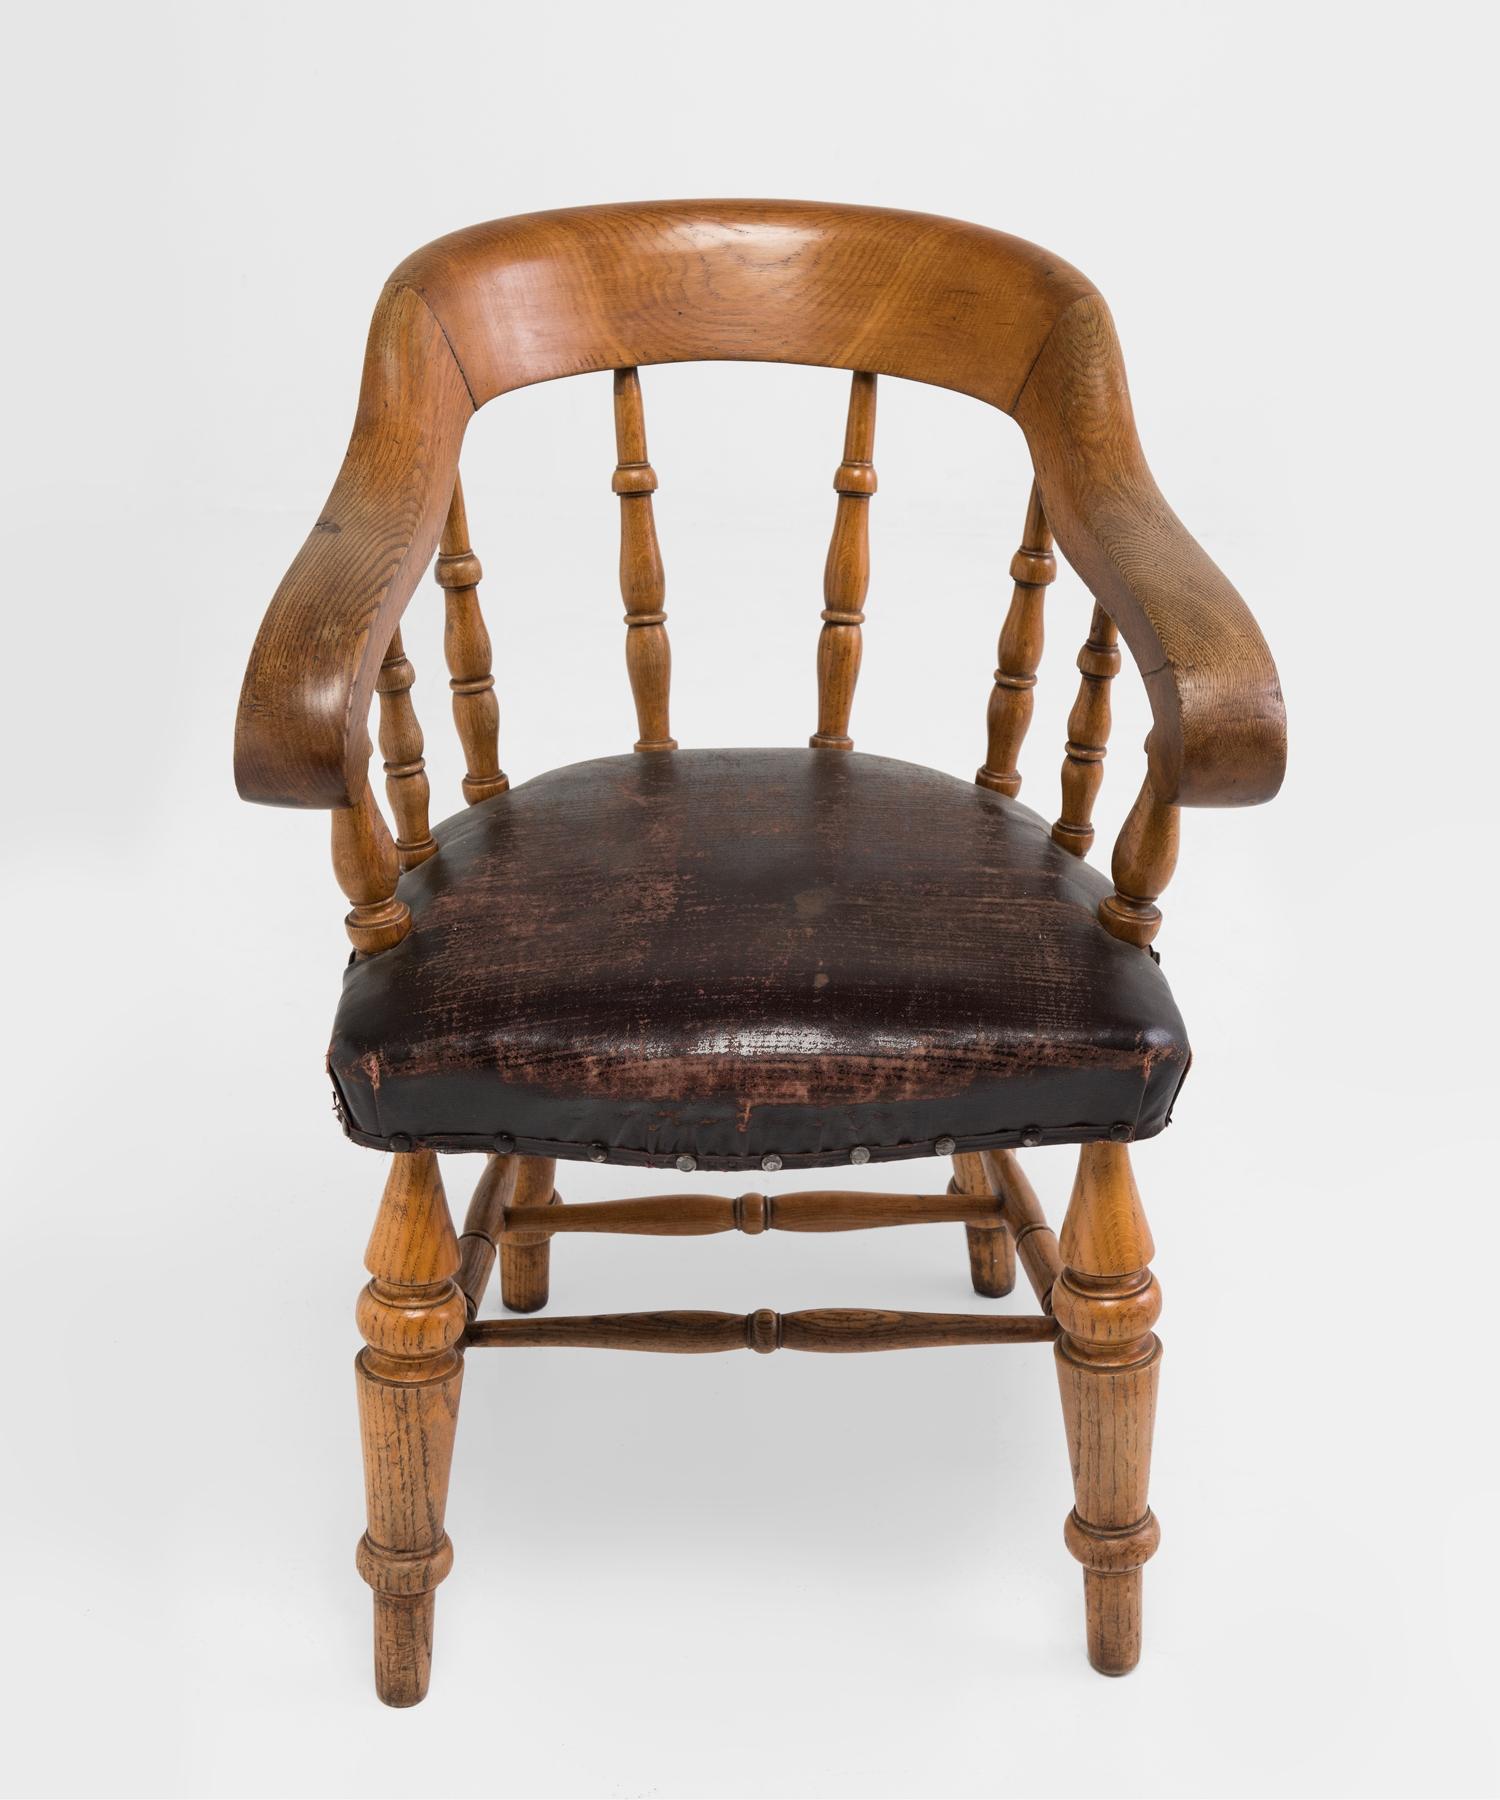 Edwardian oak armchair, England 1900.

Oak frame with original leatherette seat pad.